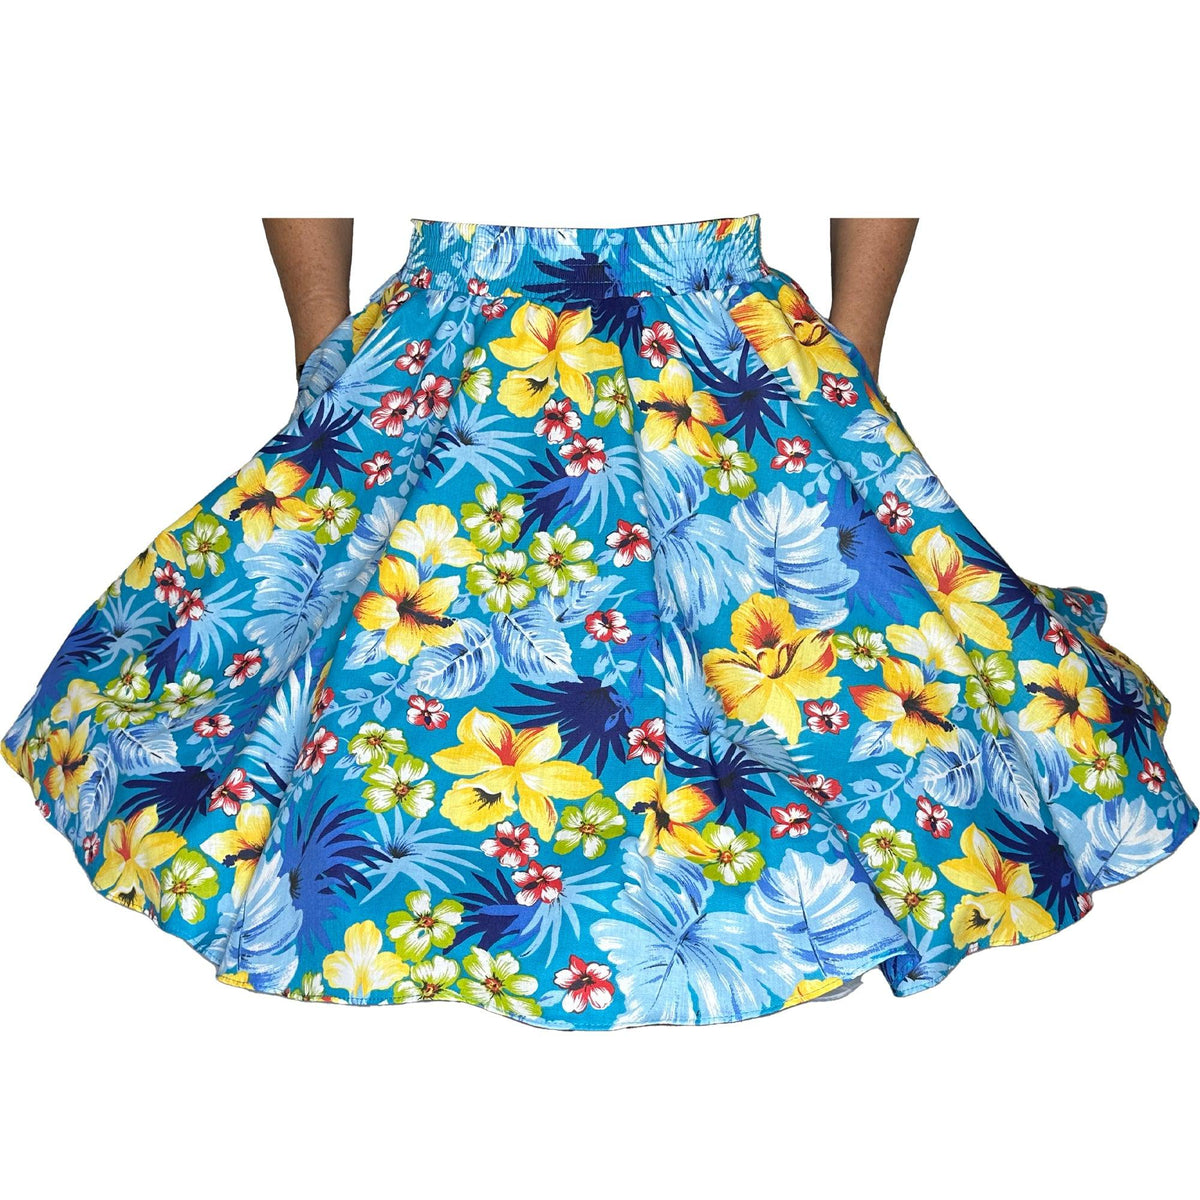 Tropical Hawaiian Square Dance Skirt